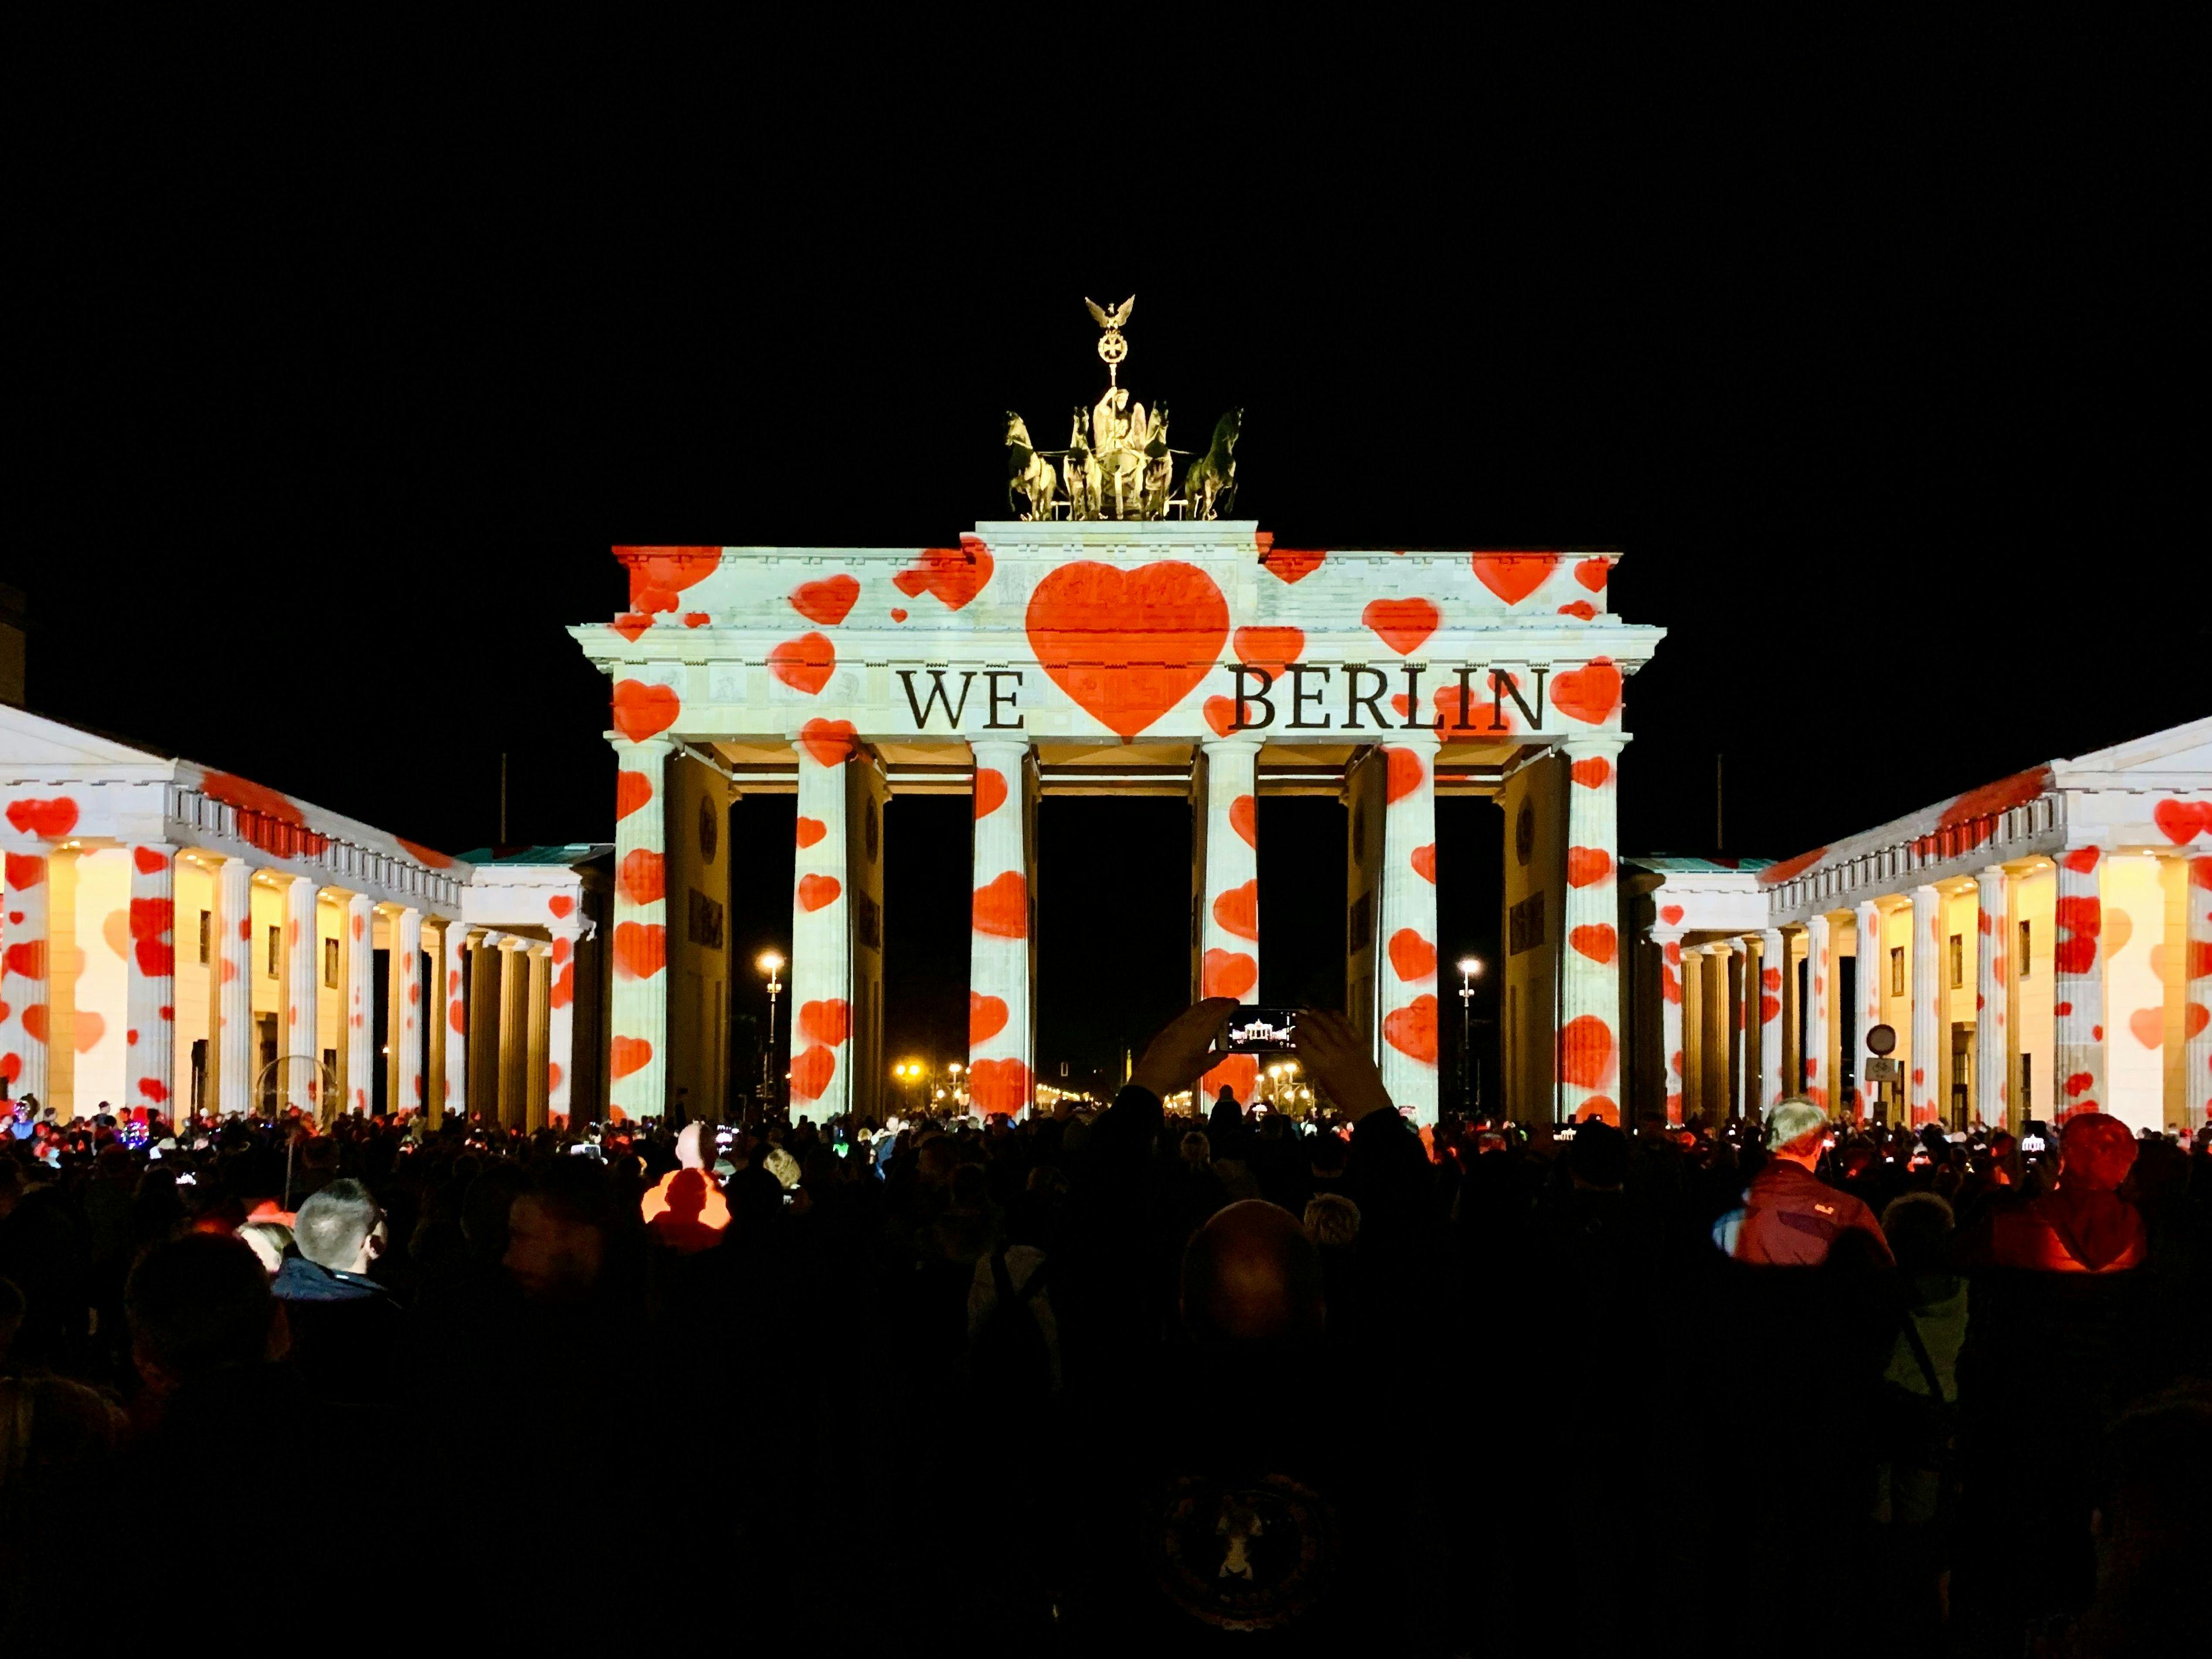 Brandenburg Gate with art installation in Berlin Germany